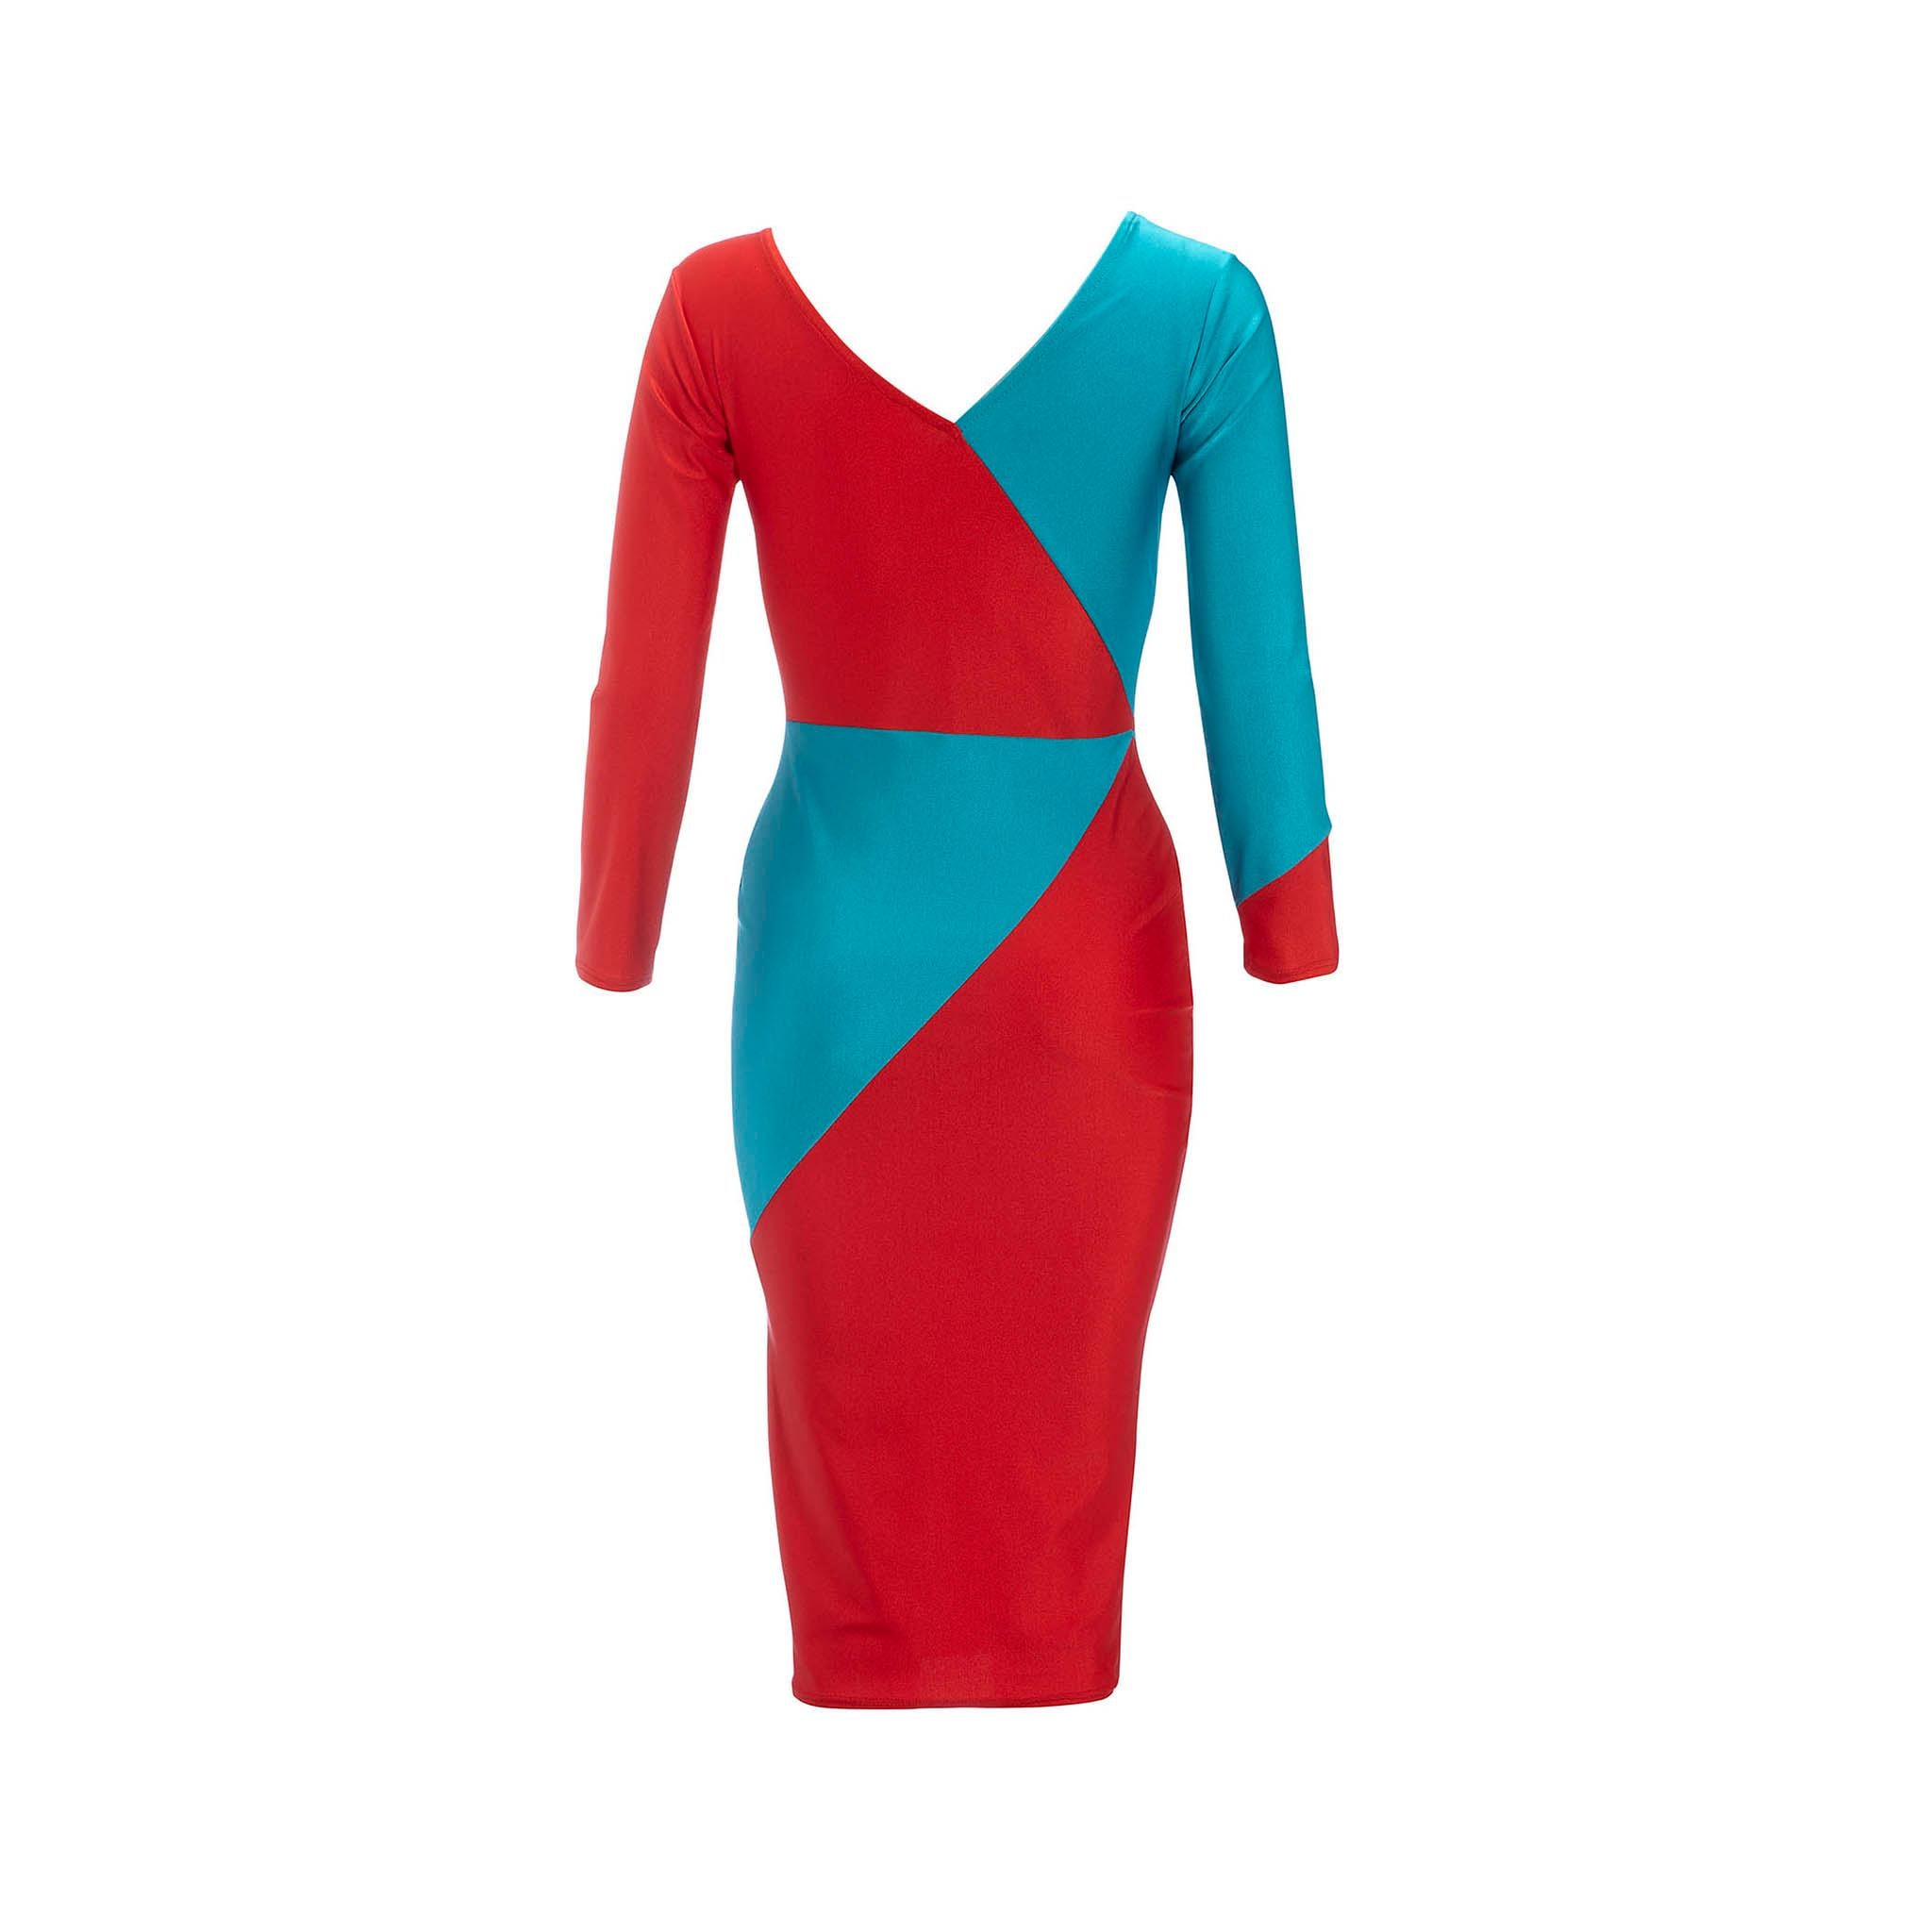 Product Details: Neon Red & Turquoise Blue - Lycra Dress
Label: Paul Howie
Era: c.1980
Fabric Content: Lycra Mix
Size: UK 10
Bust: 32/40